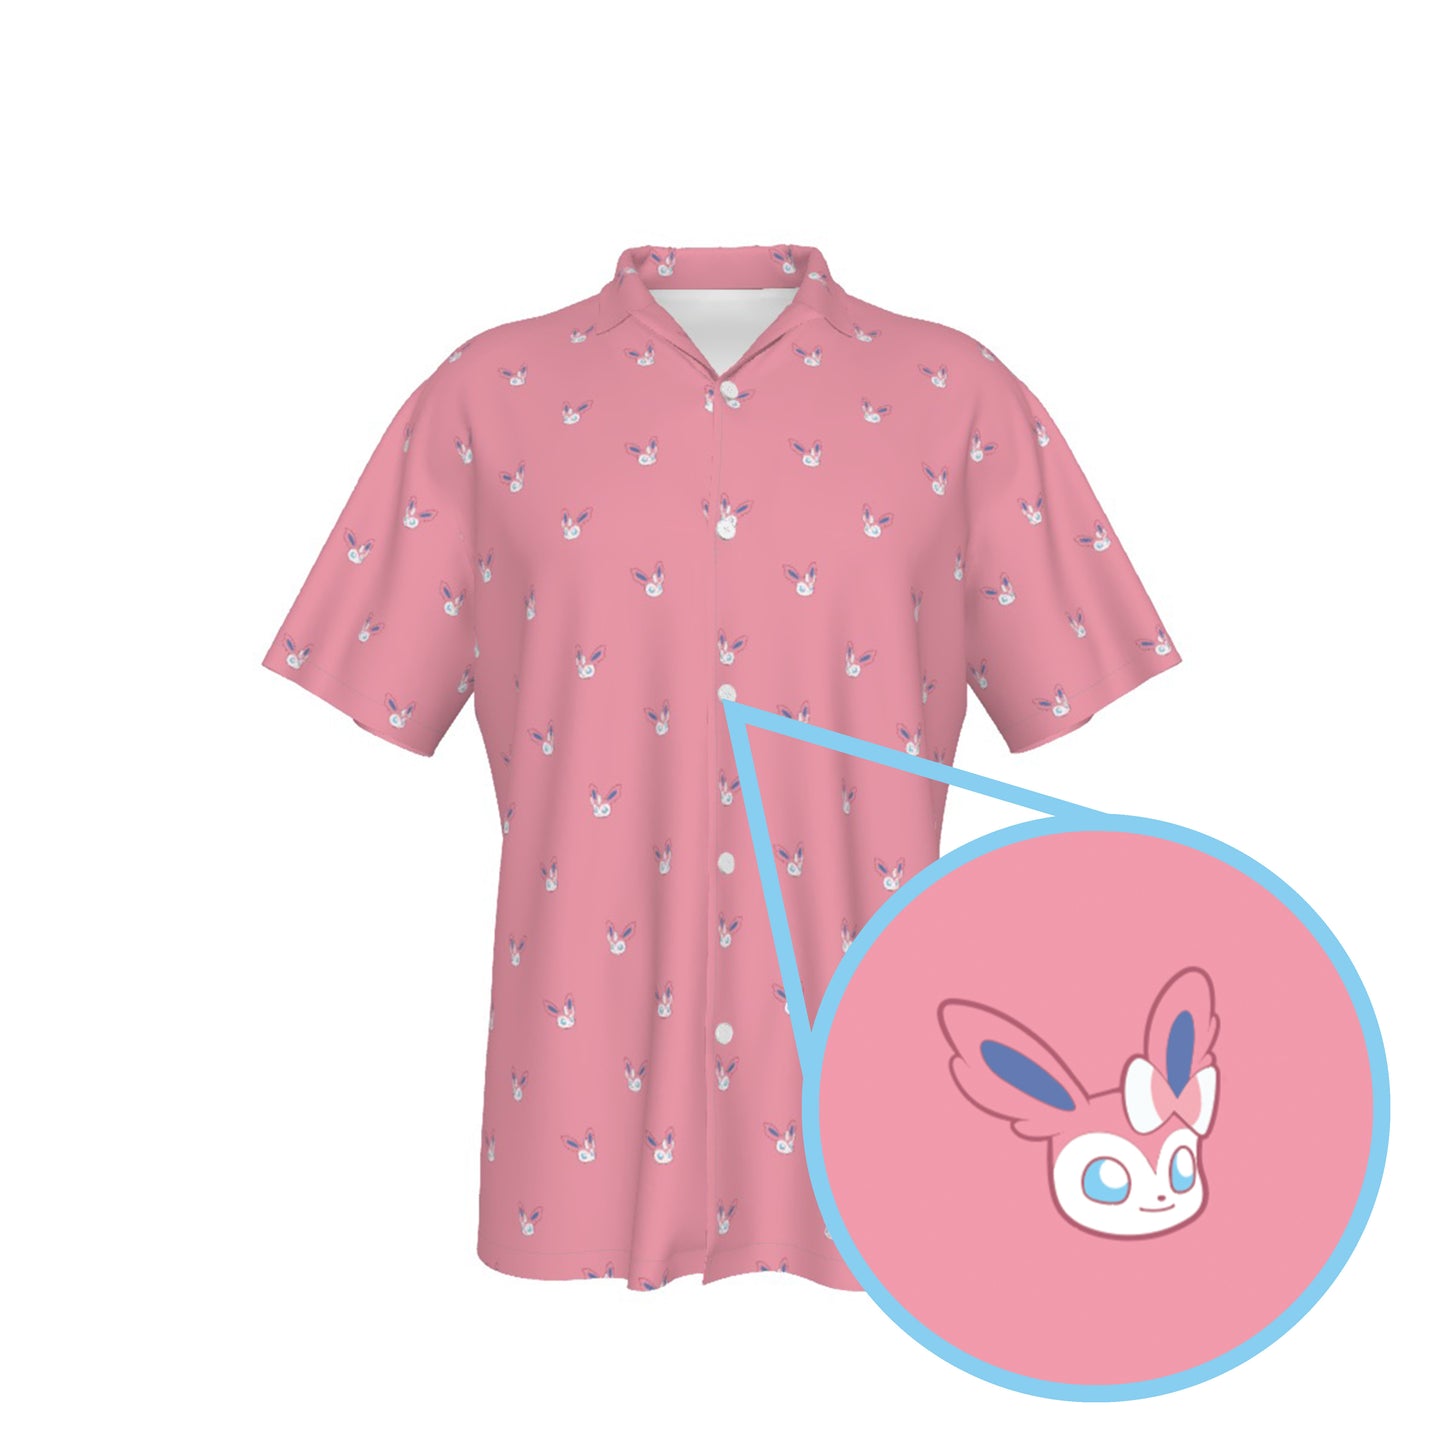 Sylveon (Pink) Button Shirt